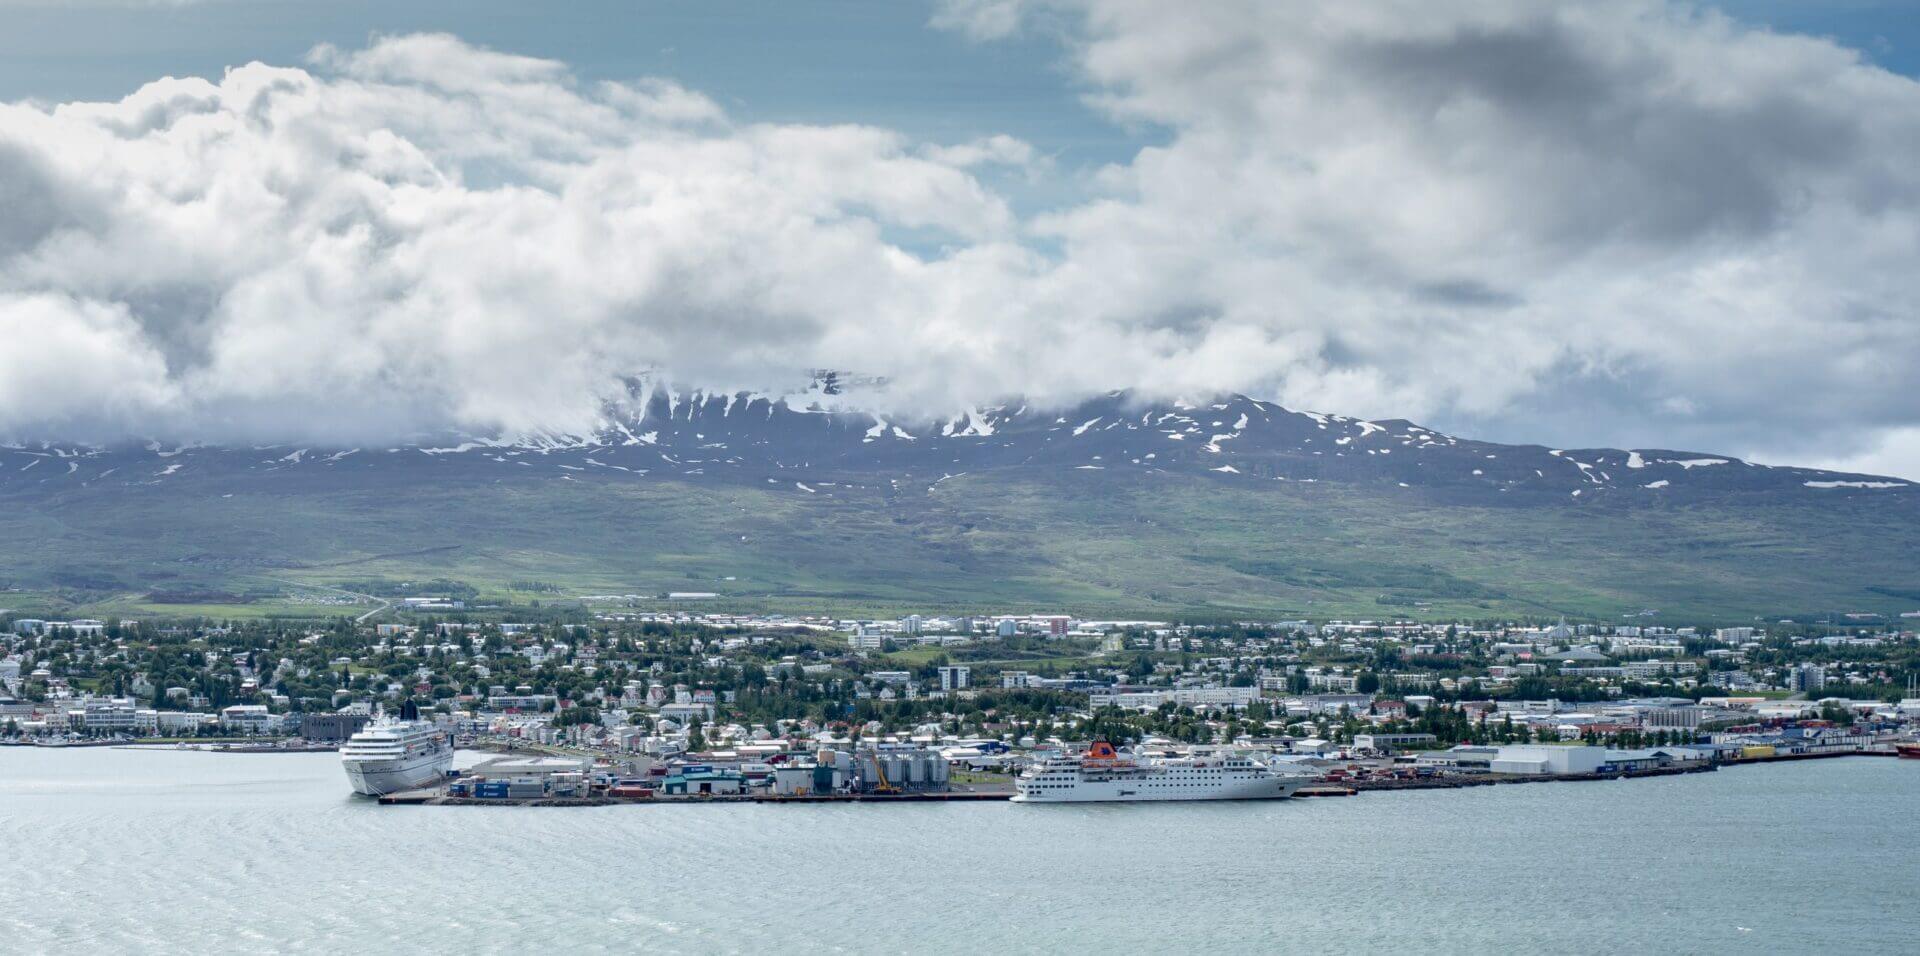 https://commons.wikimedia.org/wiki/File:Akureyri_Island.jpg